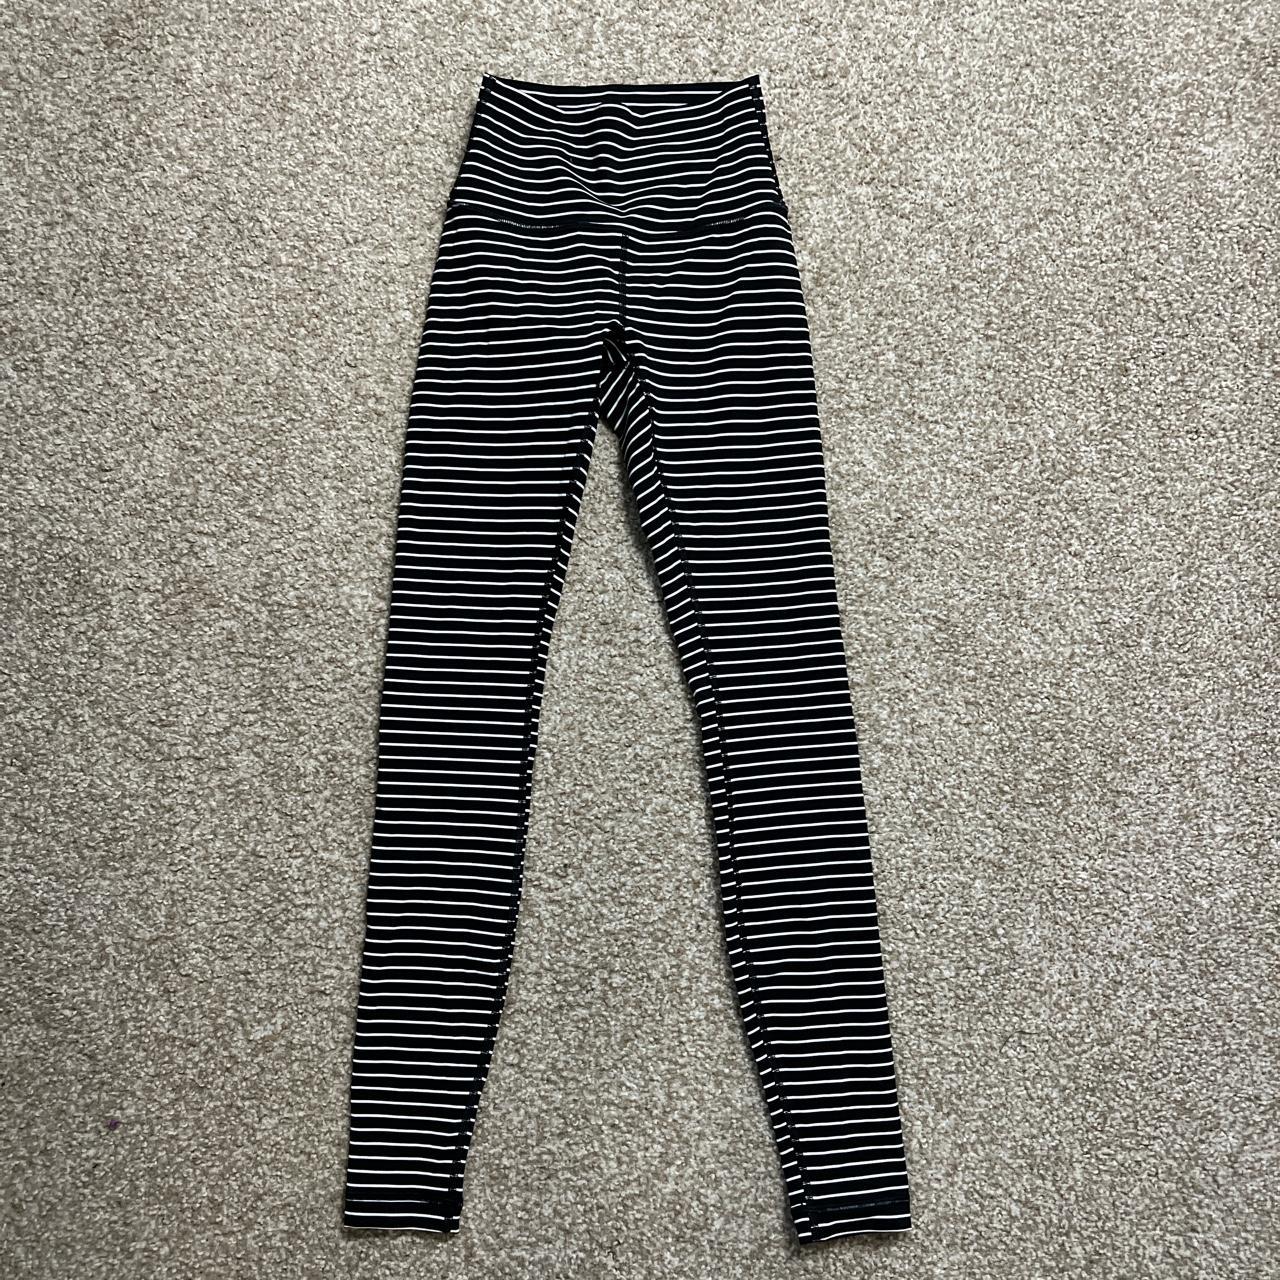 Lululemon black/grey/white patterned leggings with - Depop